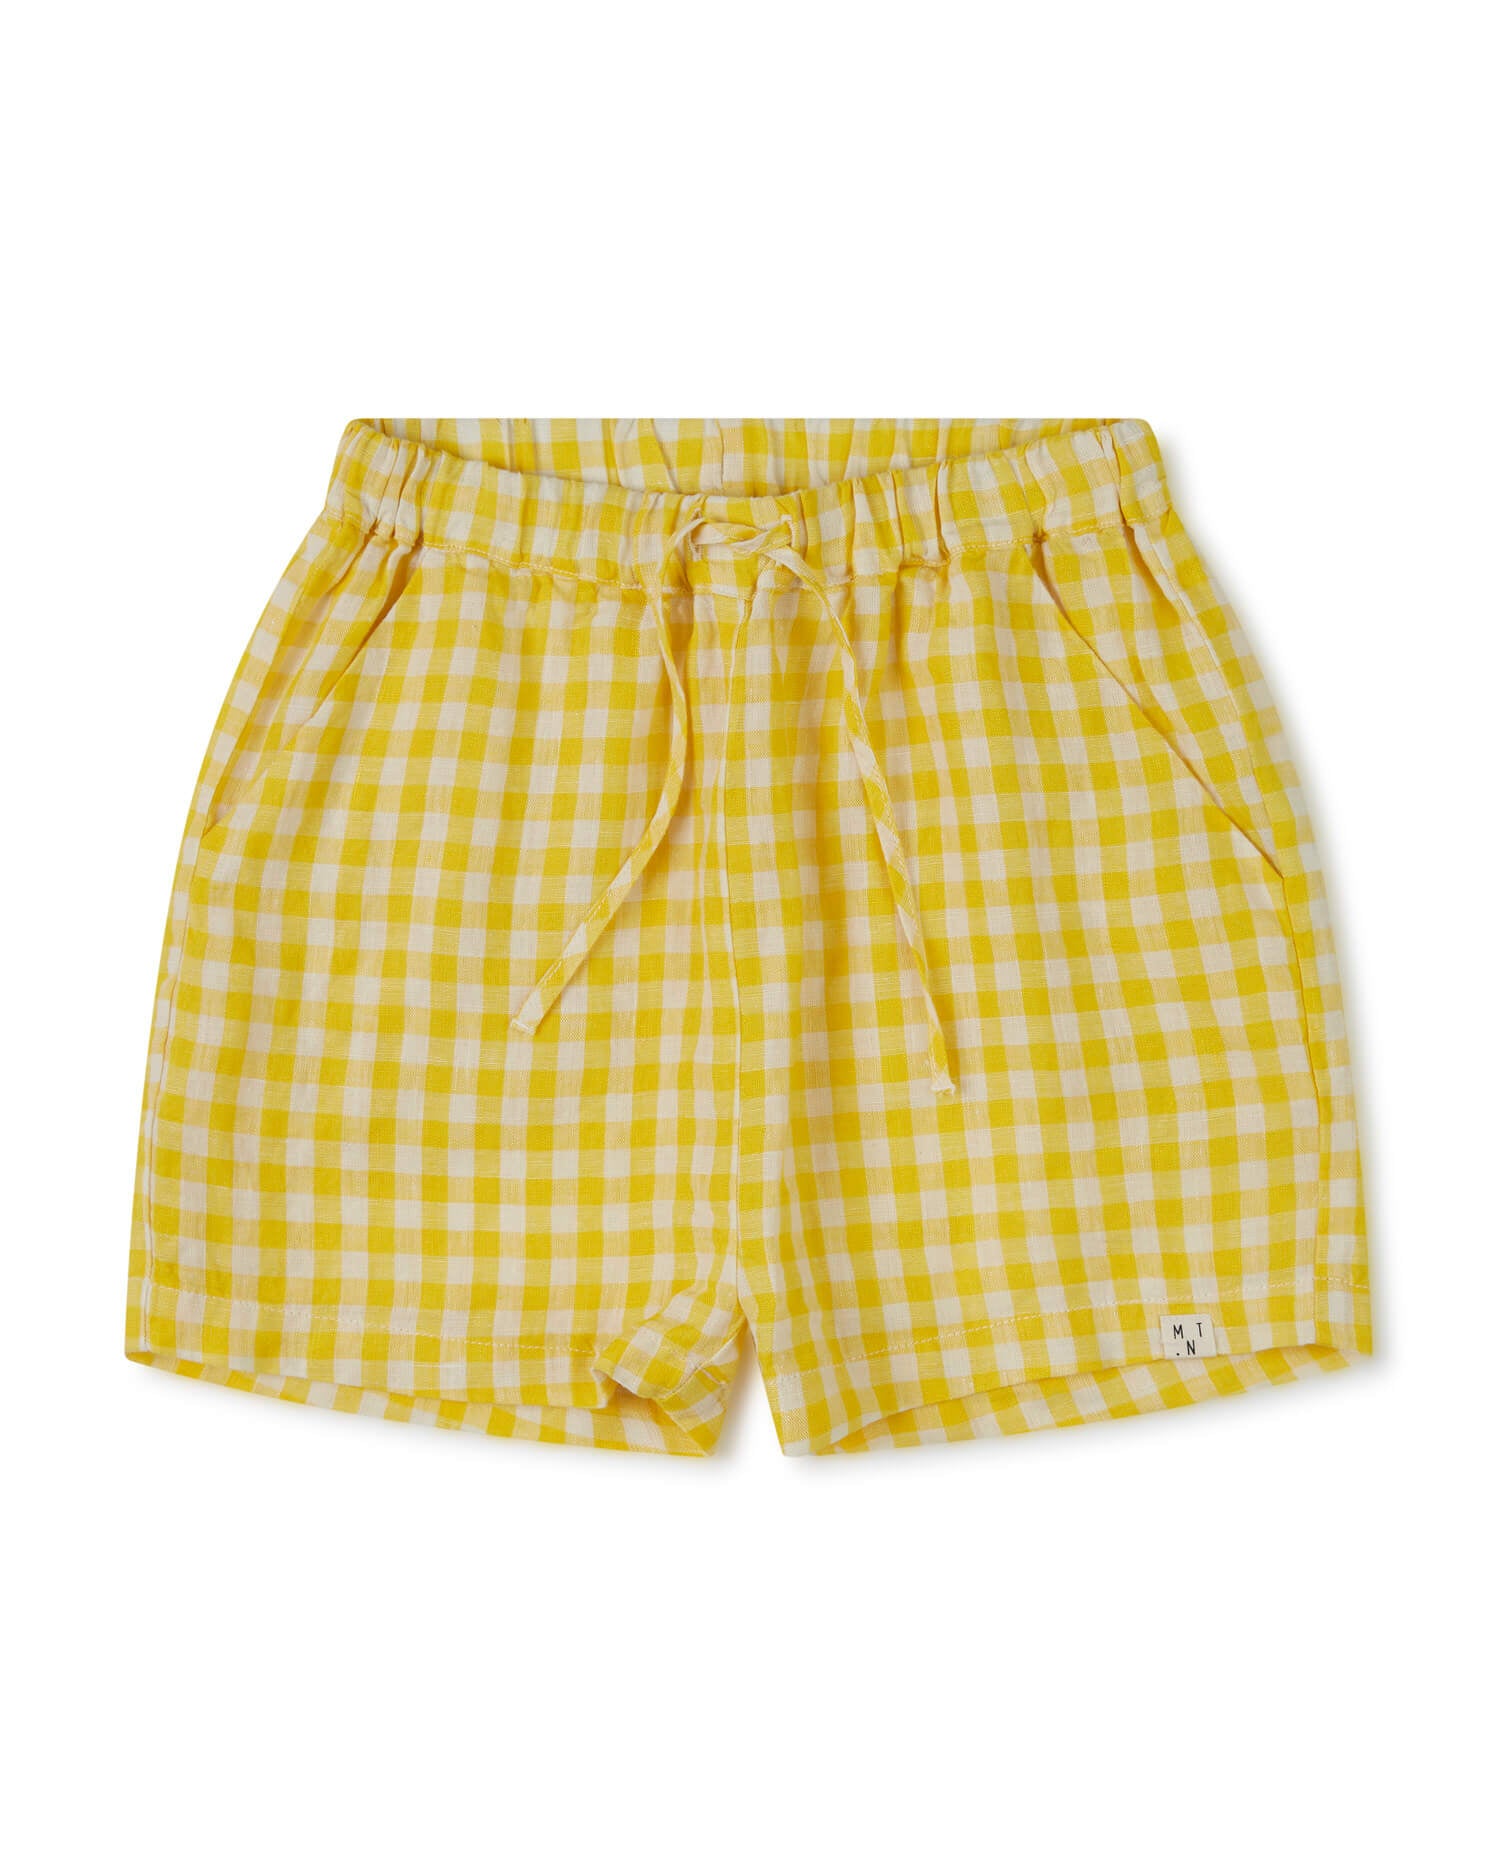 Classic Shorts yellow gingham